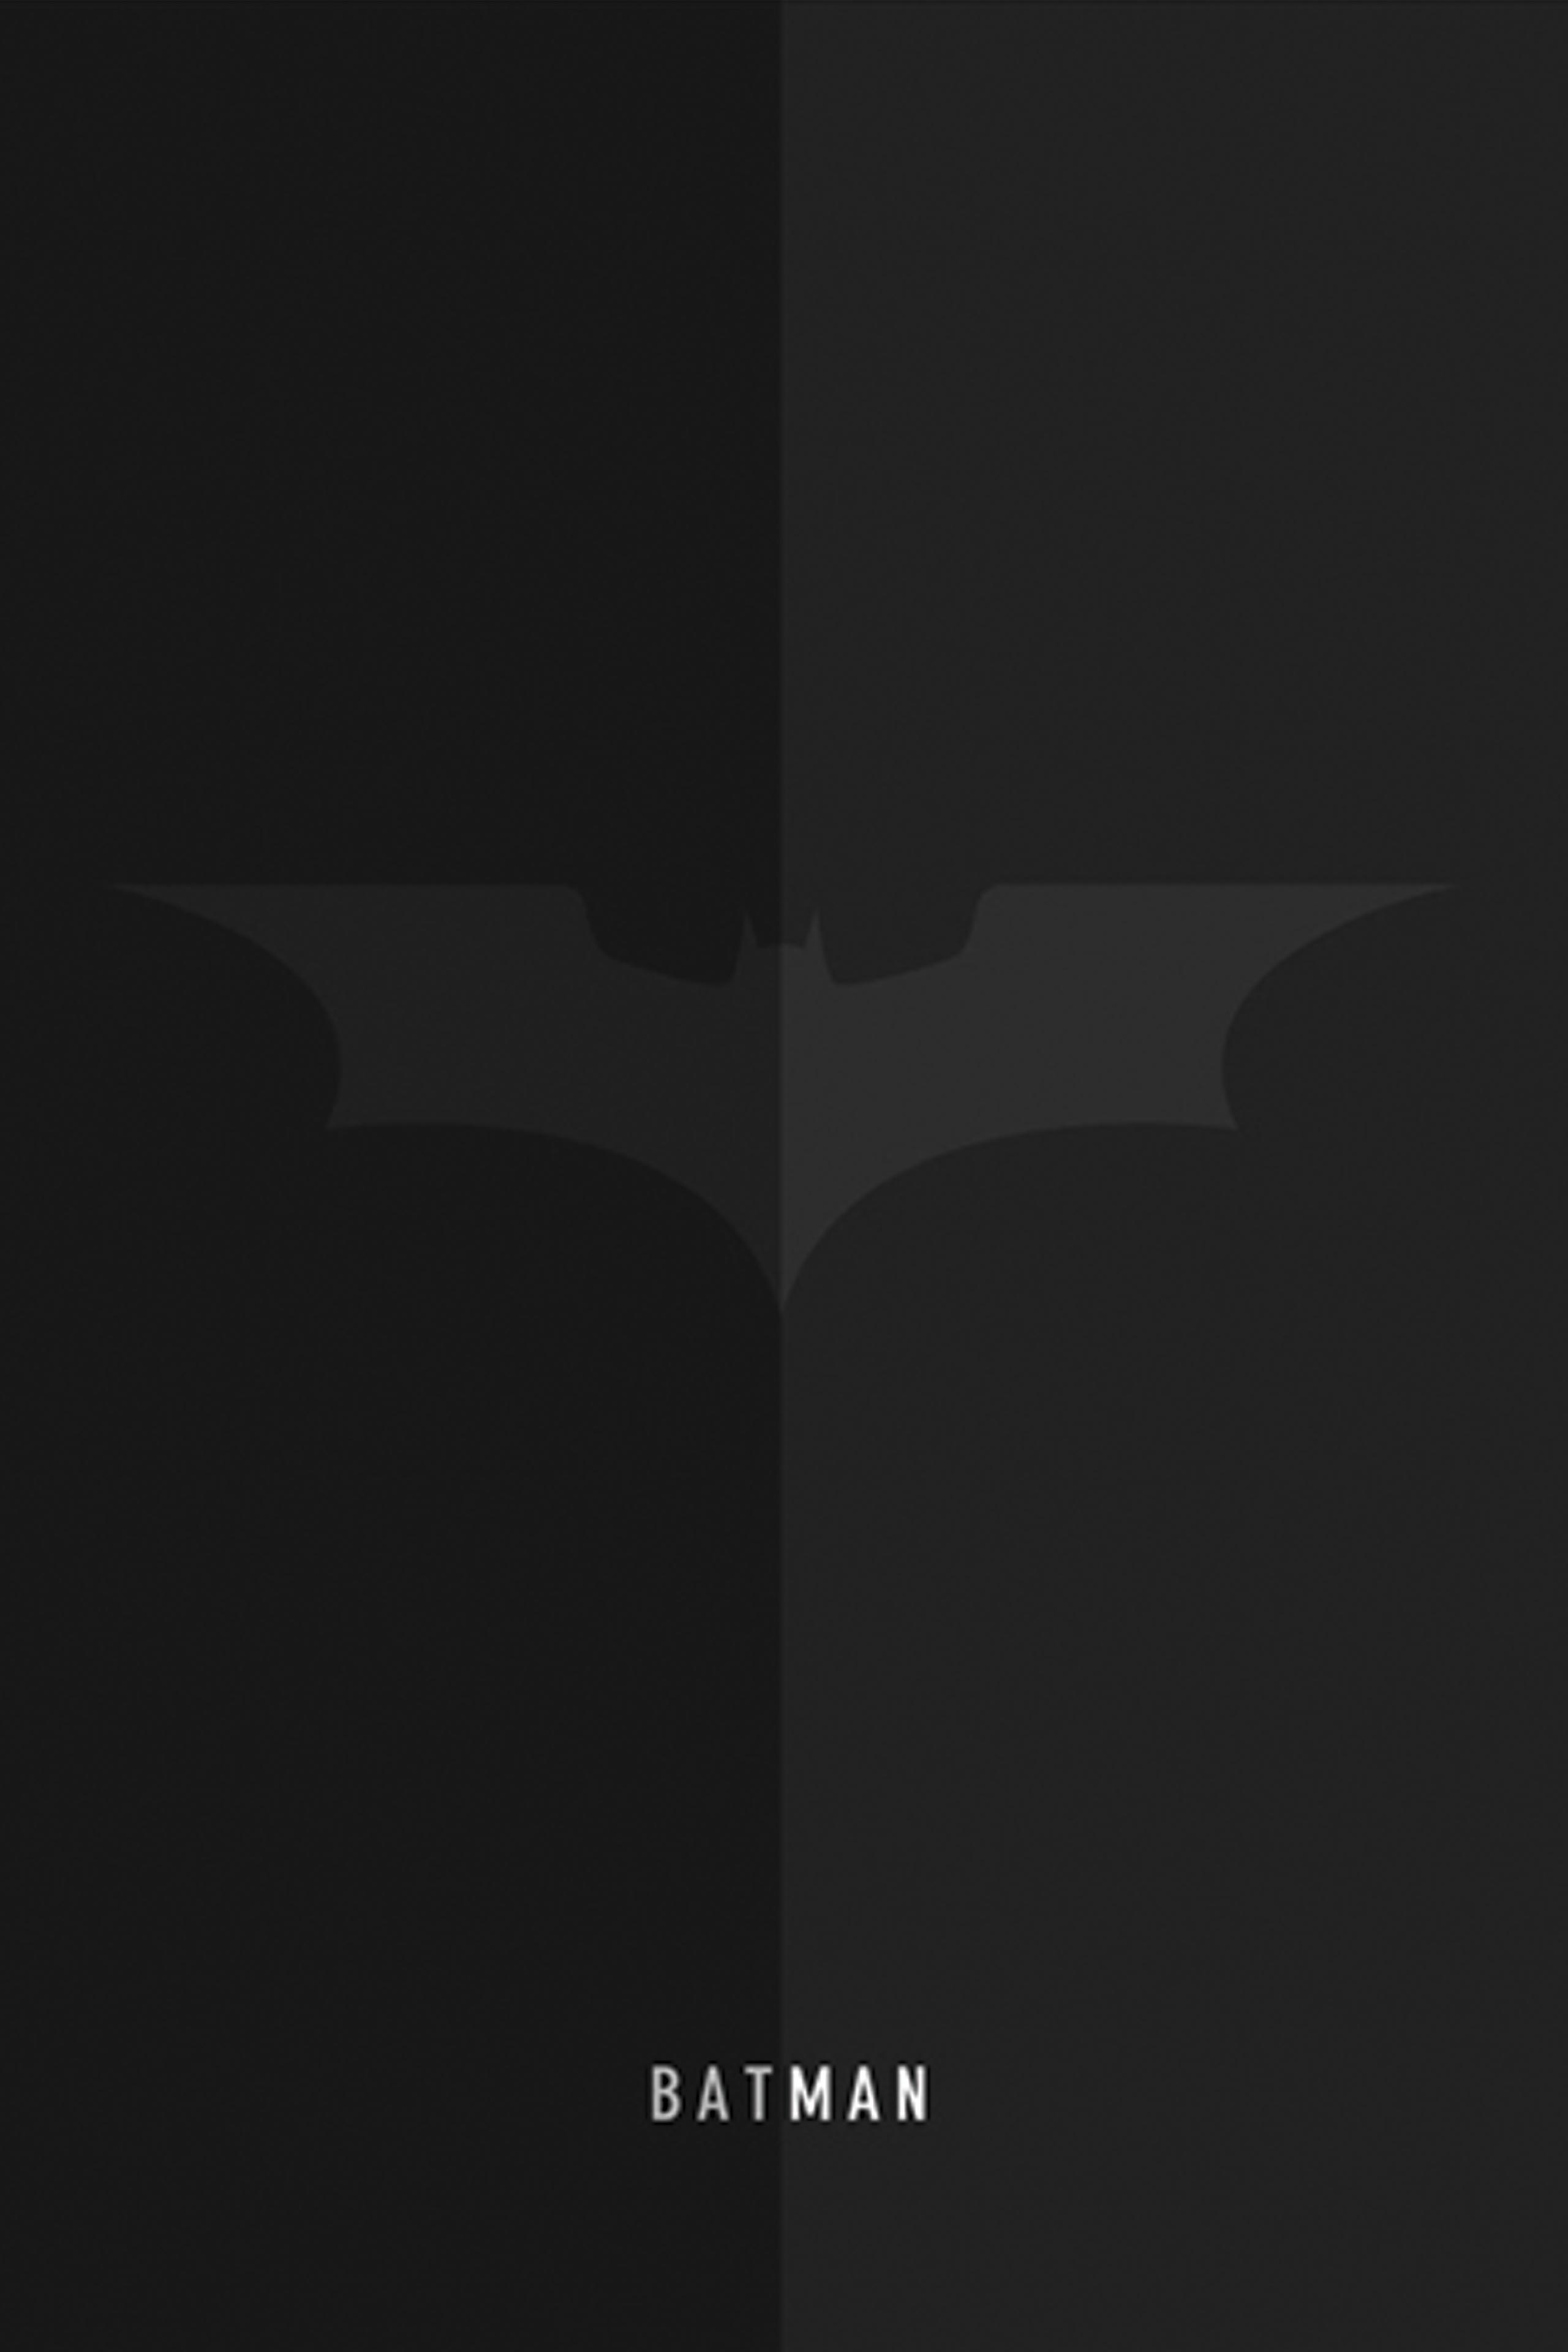 Batman iphone wallpaper